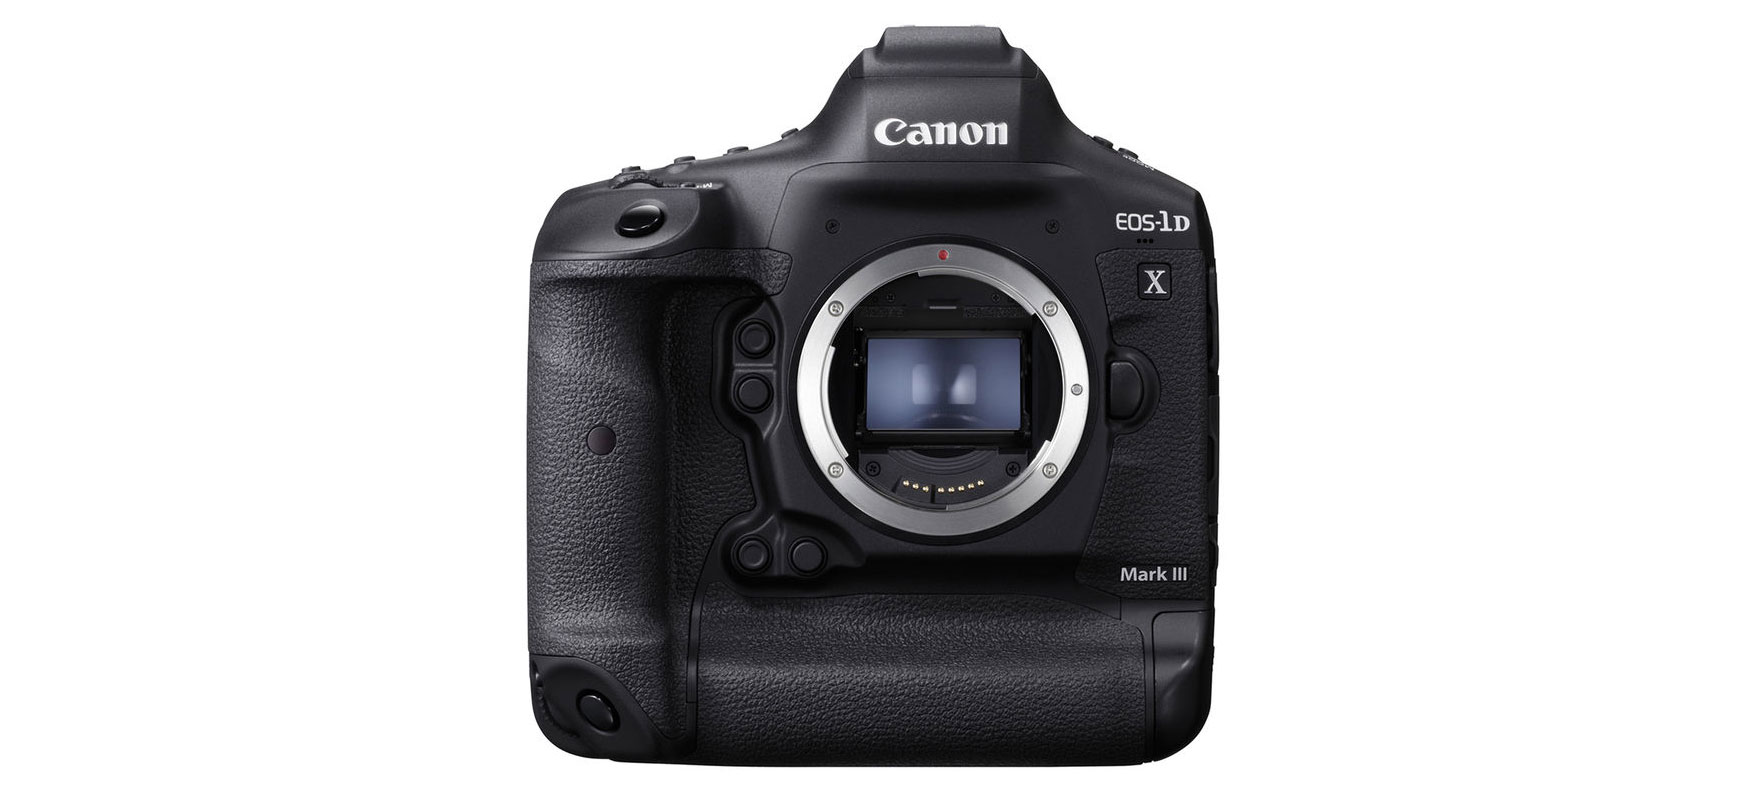 CameraTinhte_Canon-EOS-1D-Mark-III_00006.jpg